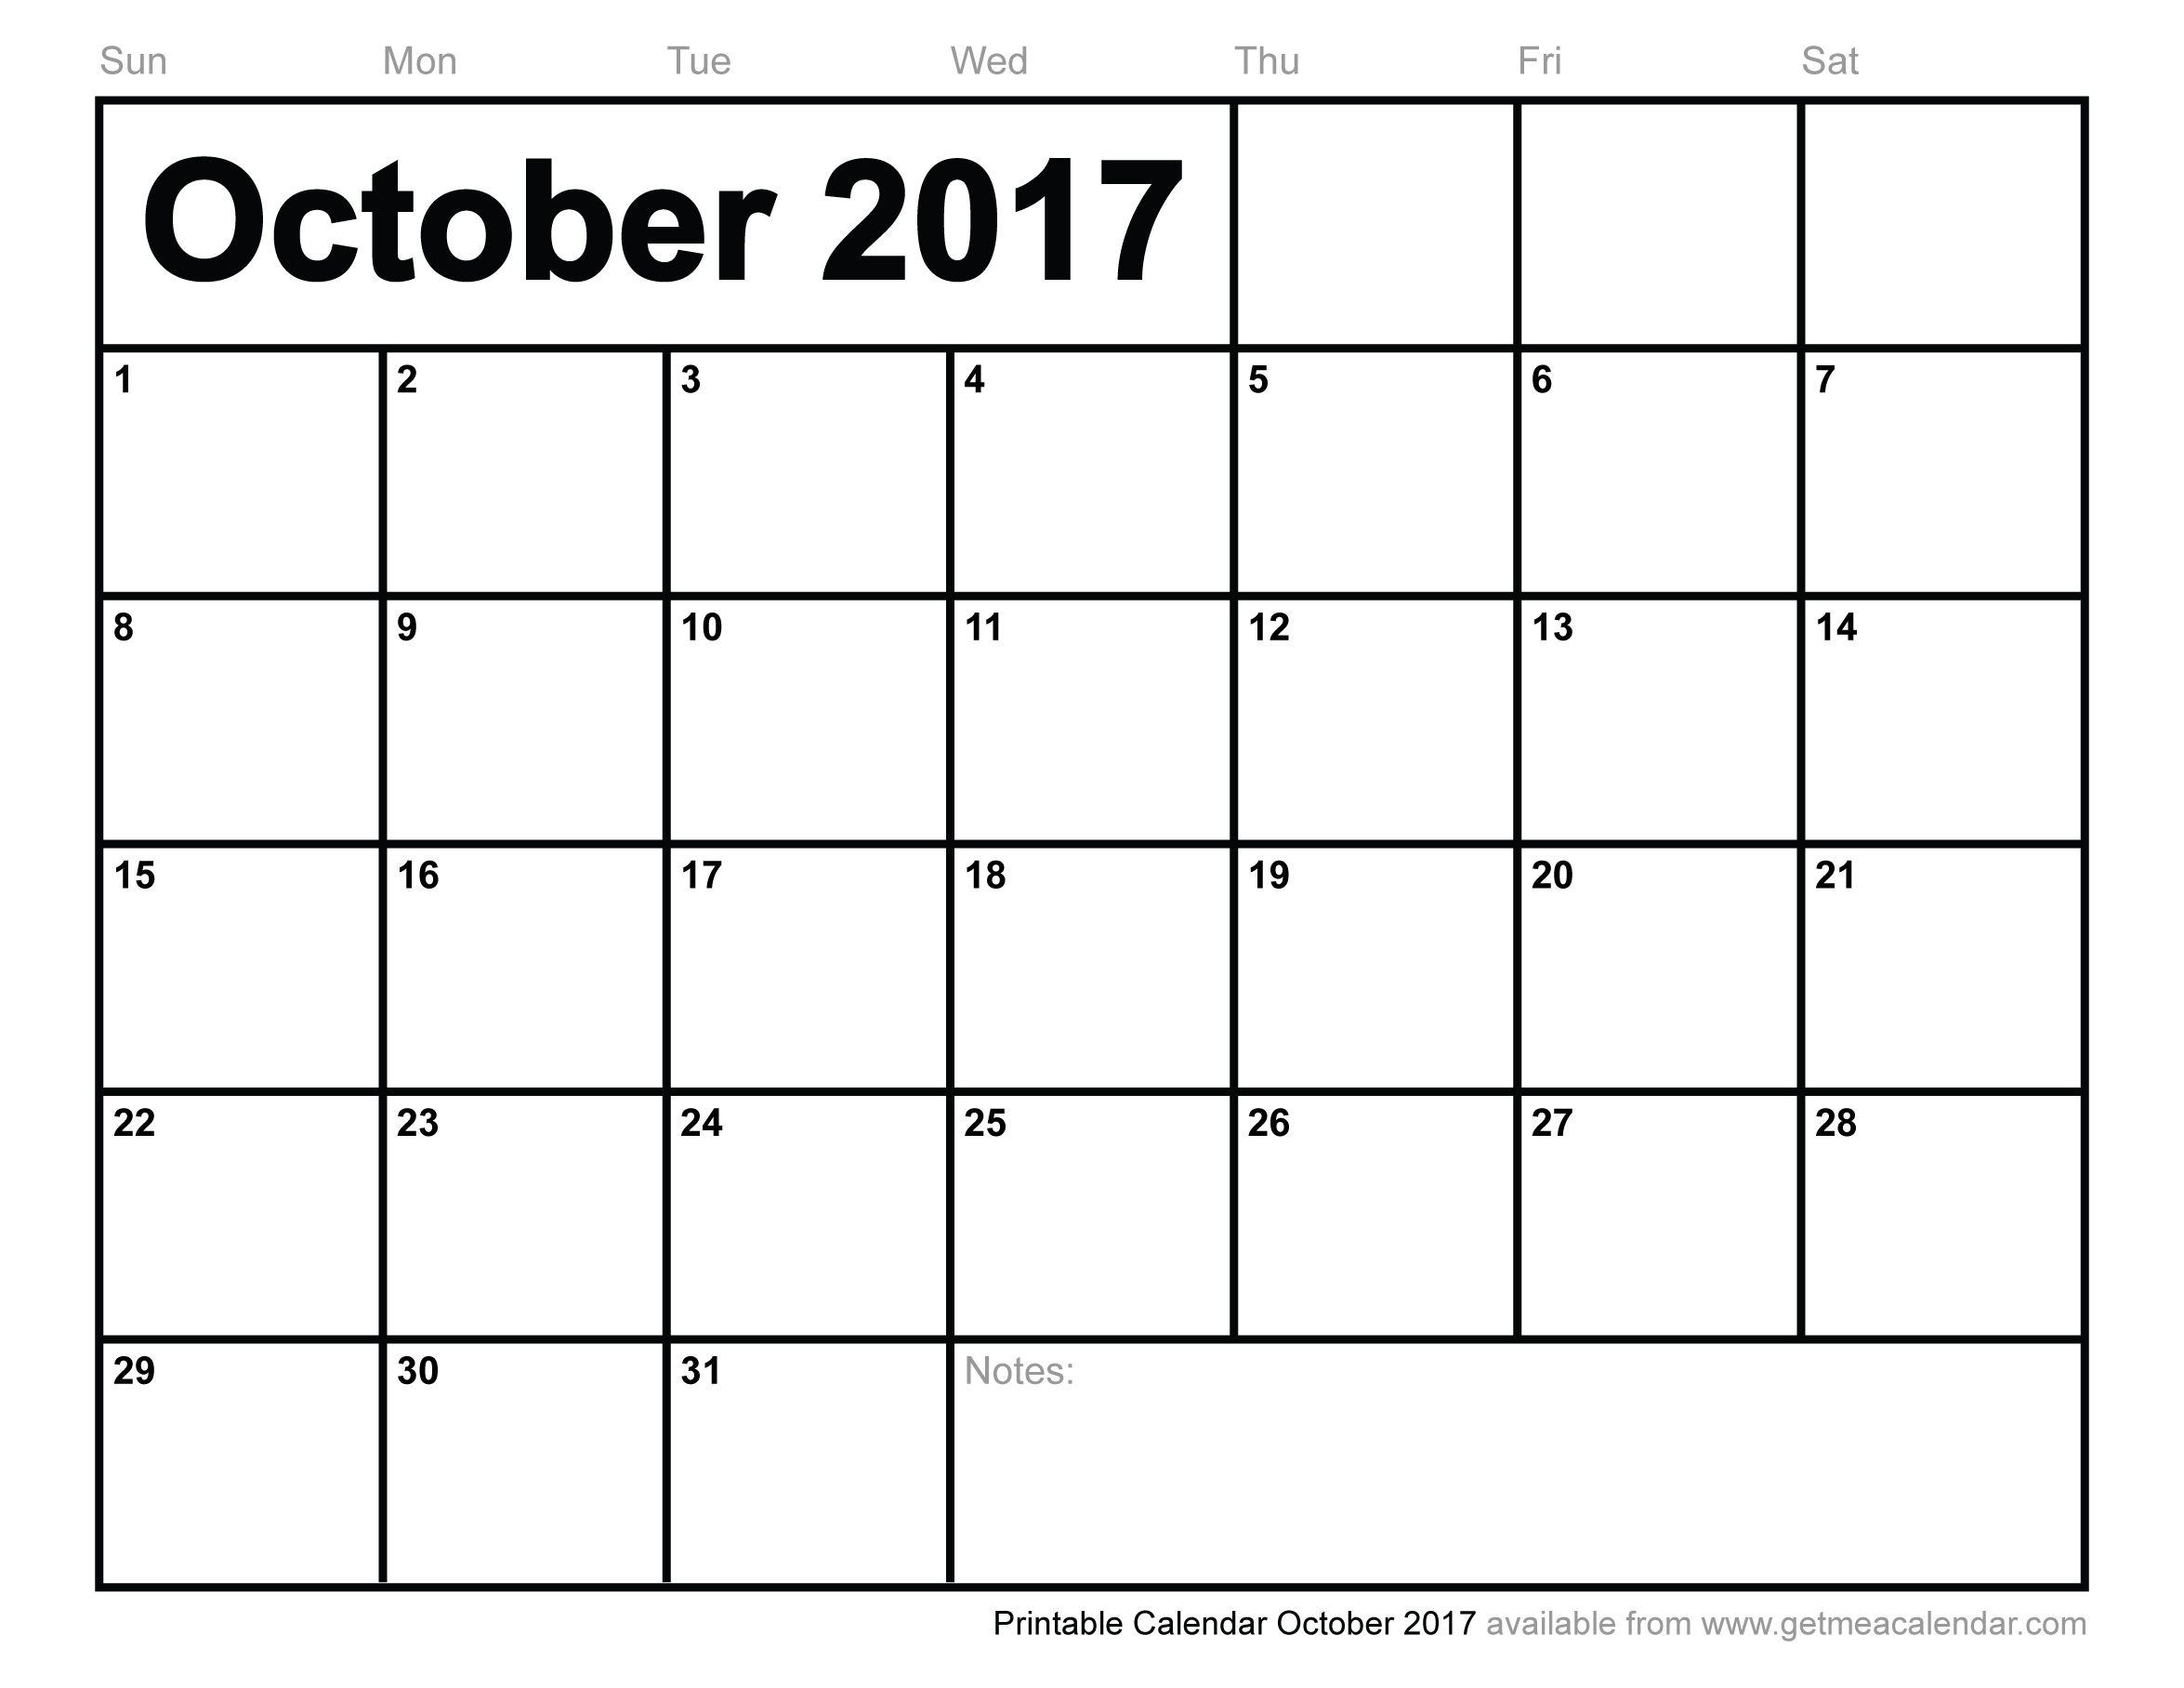 School calendars 2016/2017 as free printable PDF templates